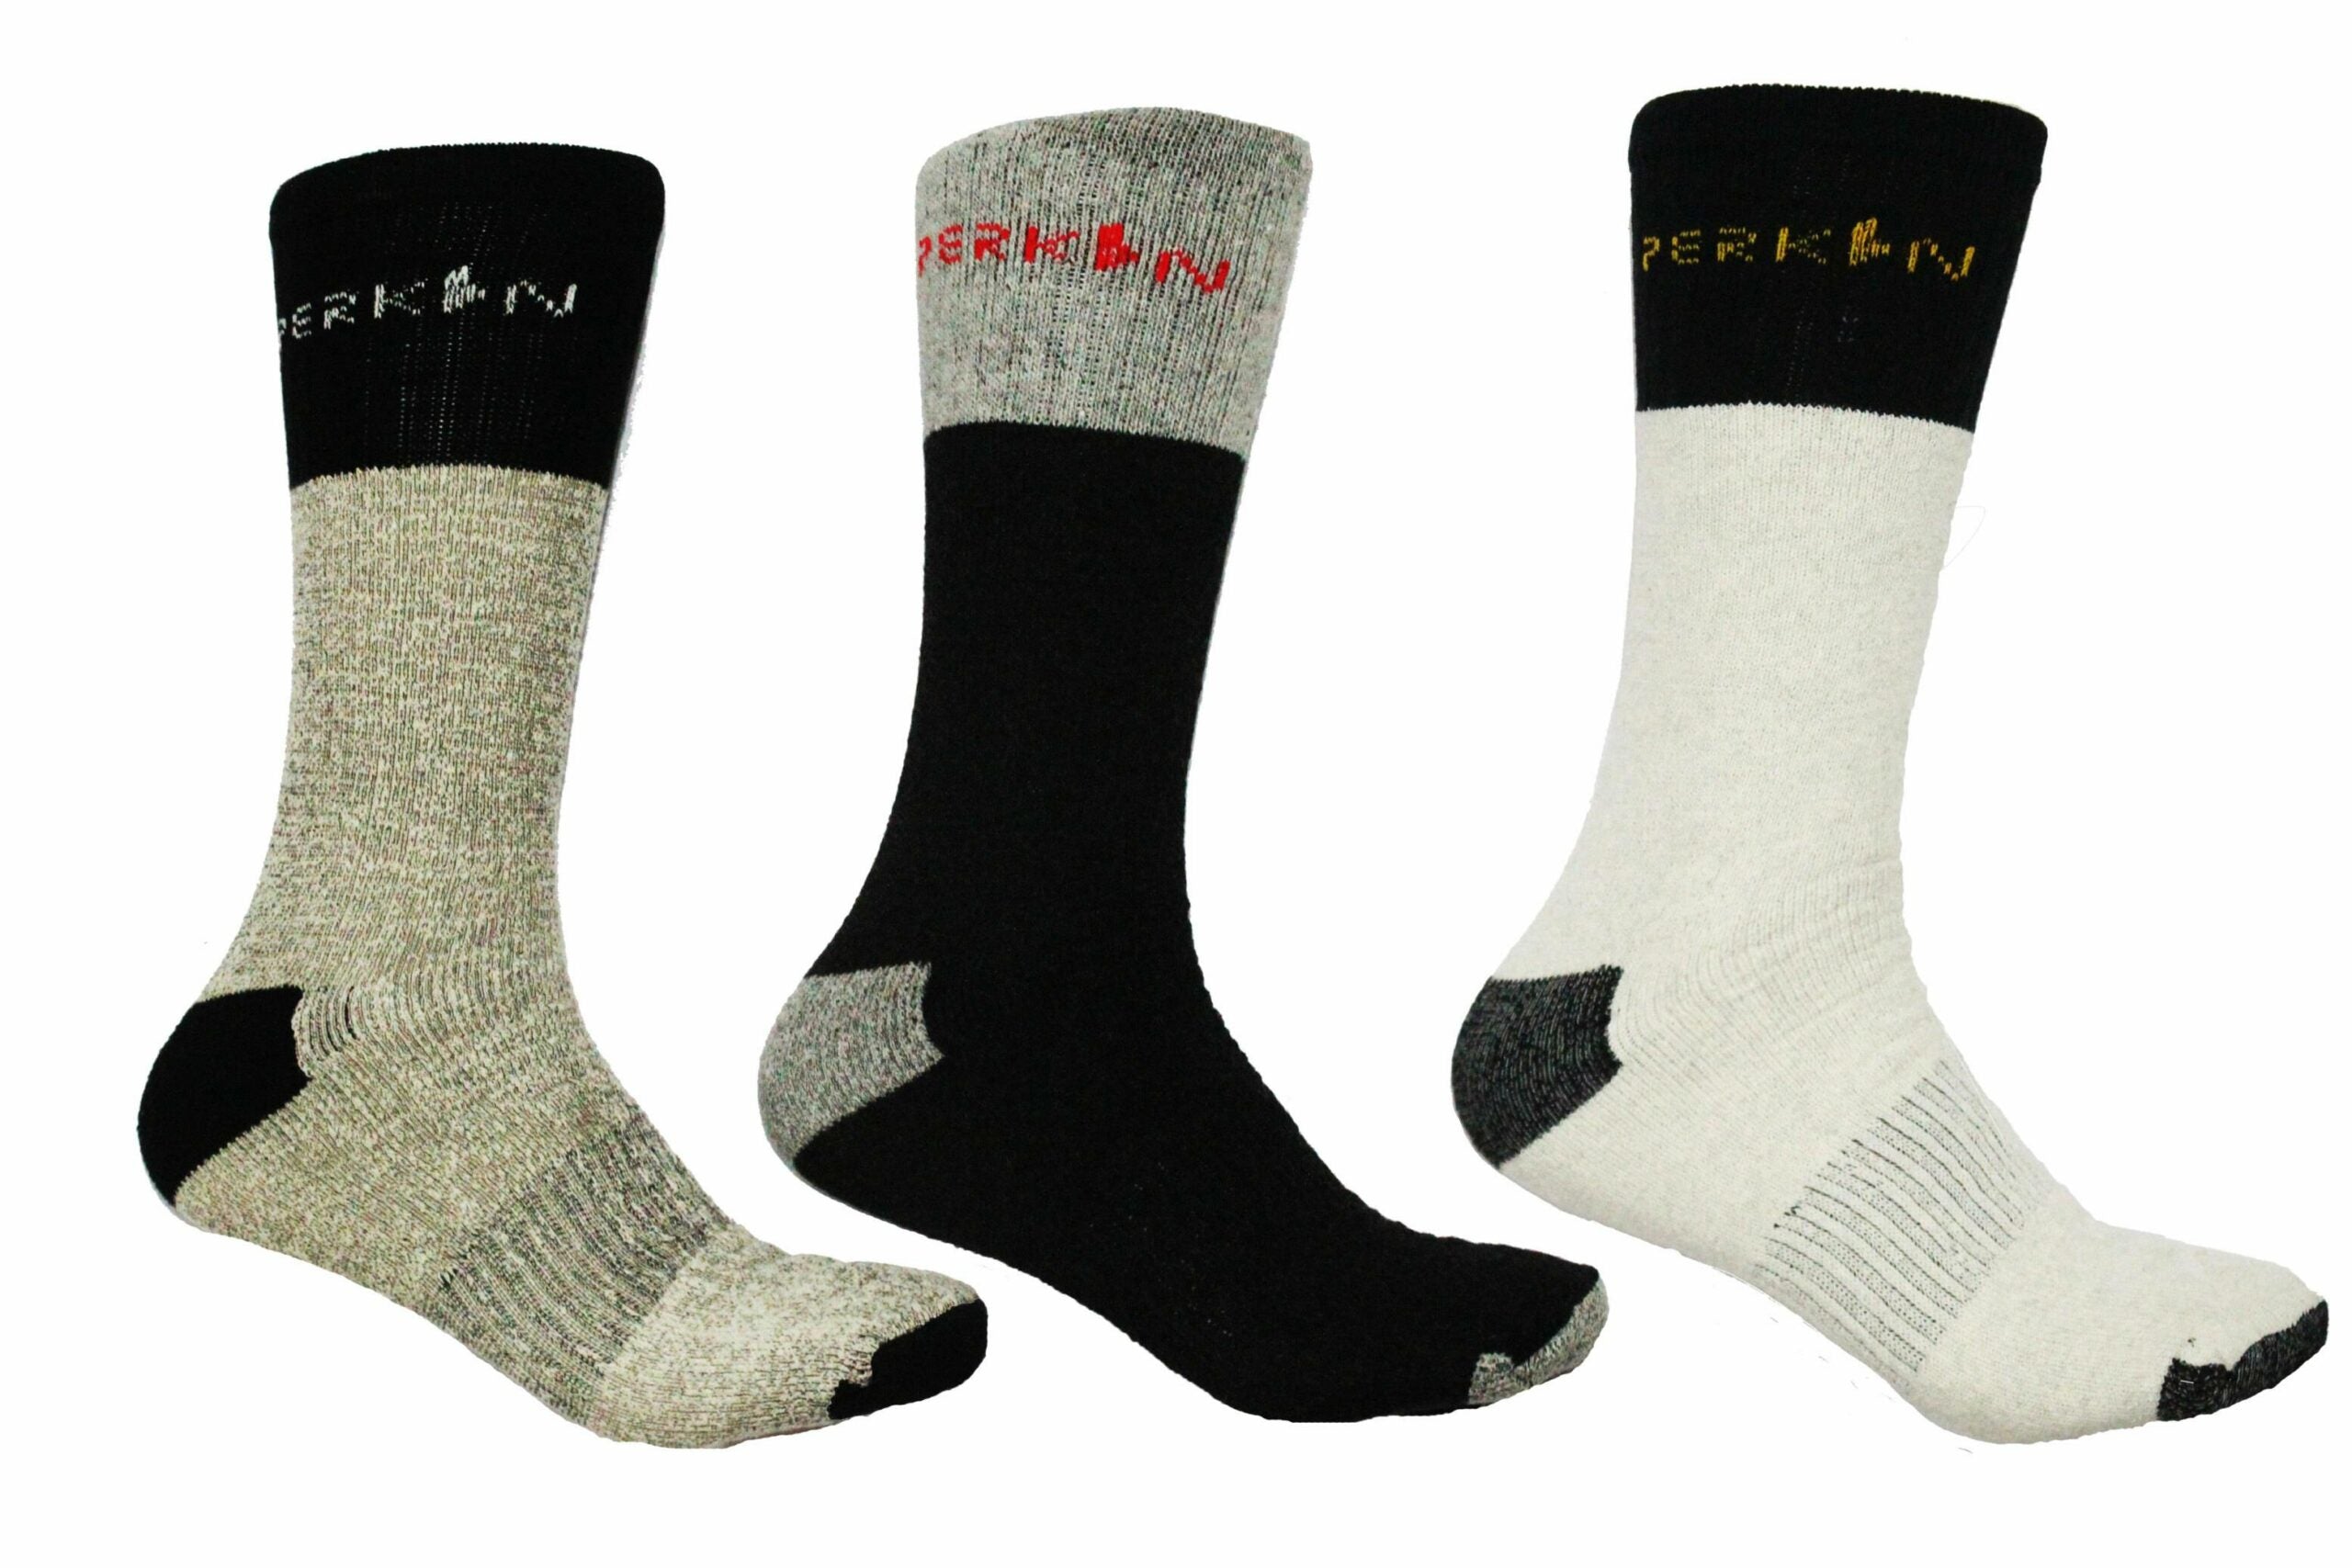 3 Pair of Work Socks Ideal for Camping, Hiking, Outdoor, Trekking & Ski Wear